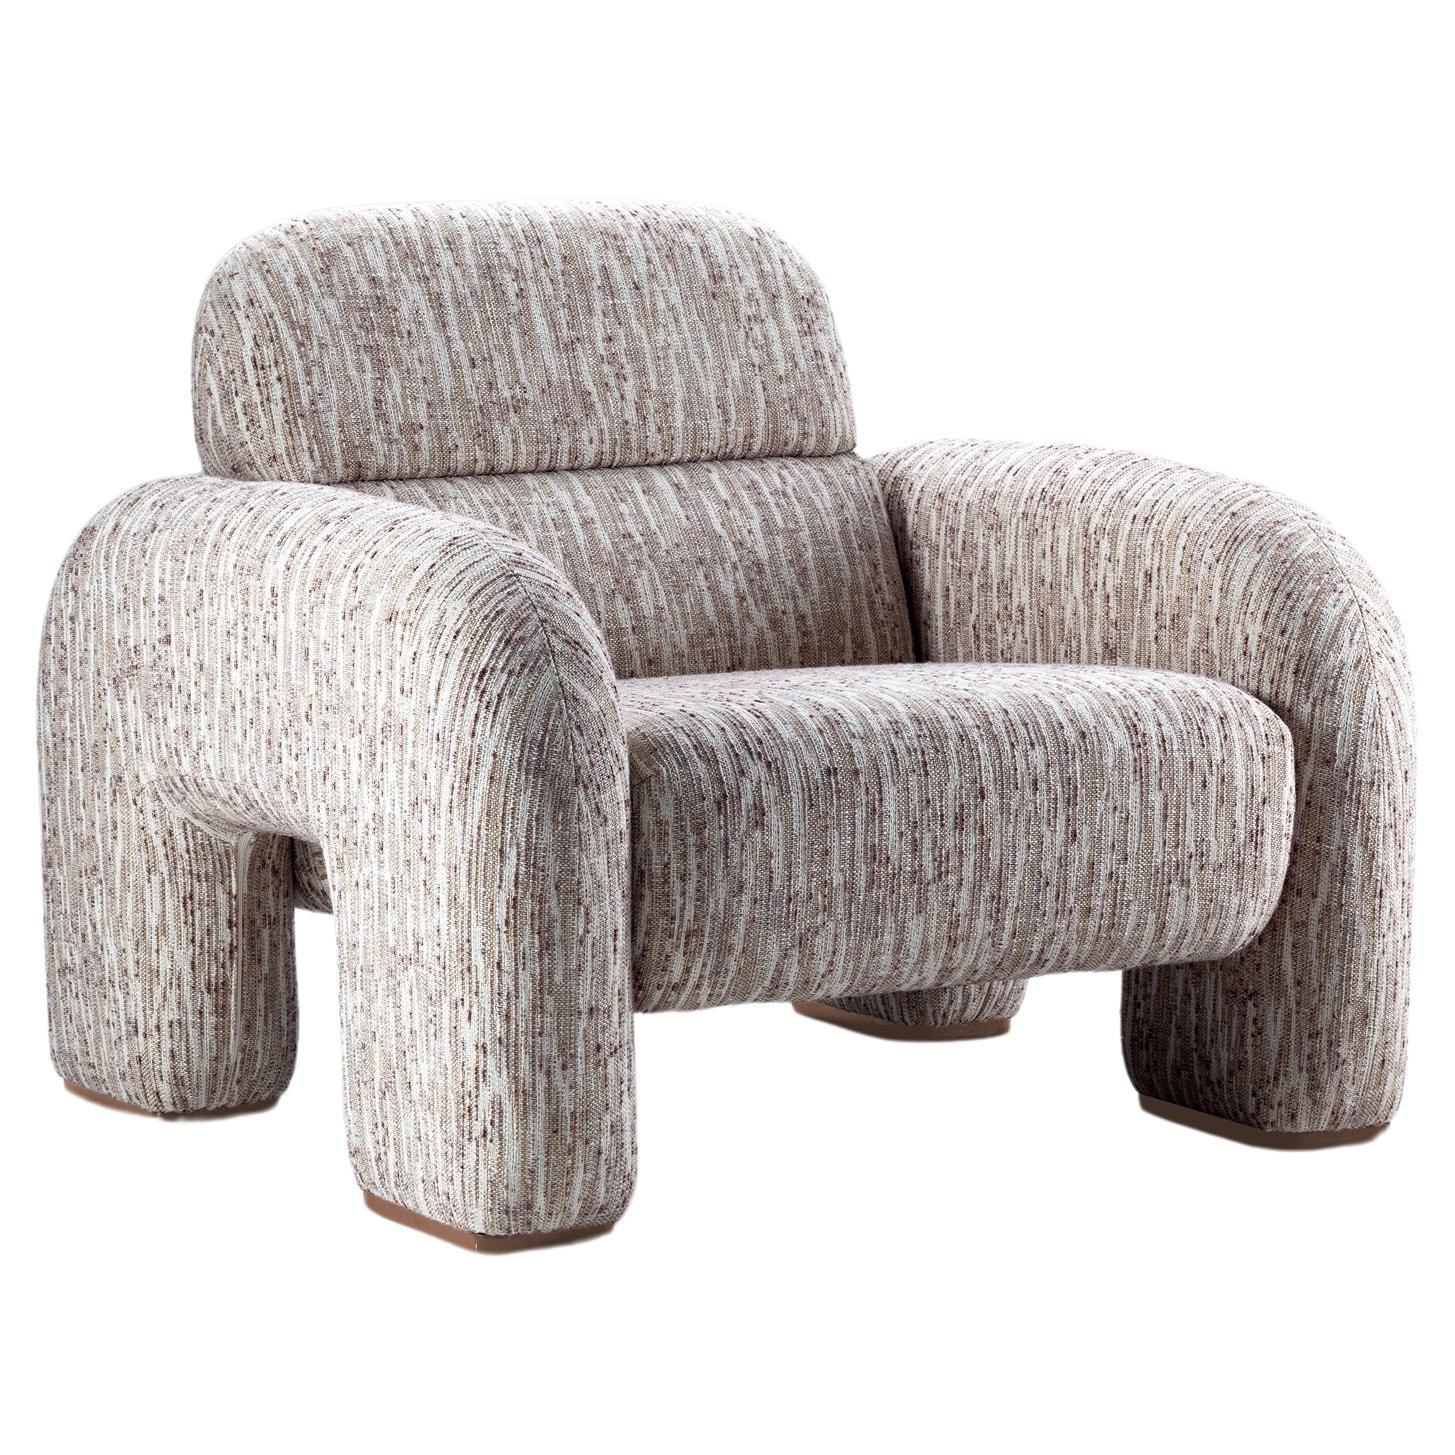 DOOQ! NEW! Organic Modernist Vertigo Armchair in Beige and Grey Fabric For Sale